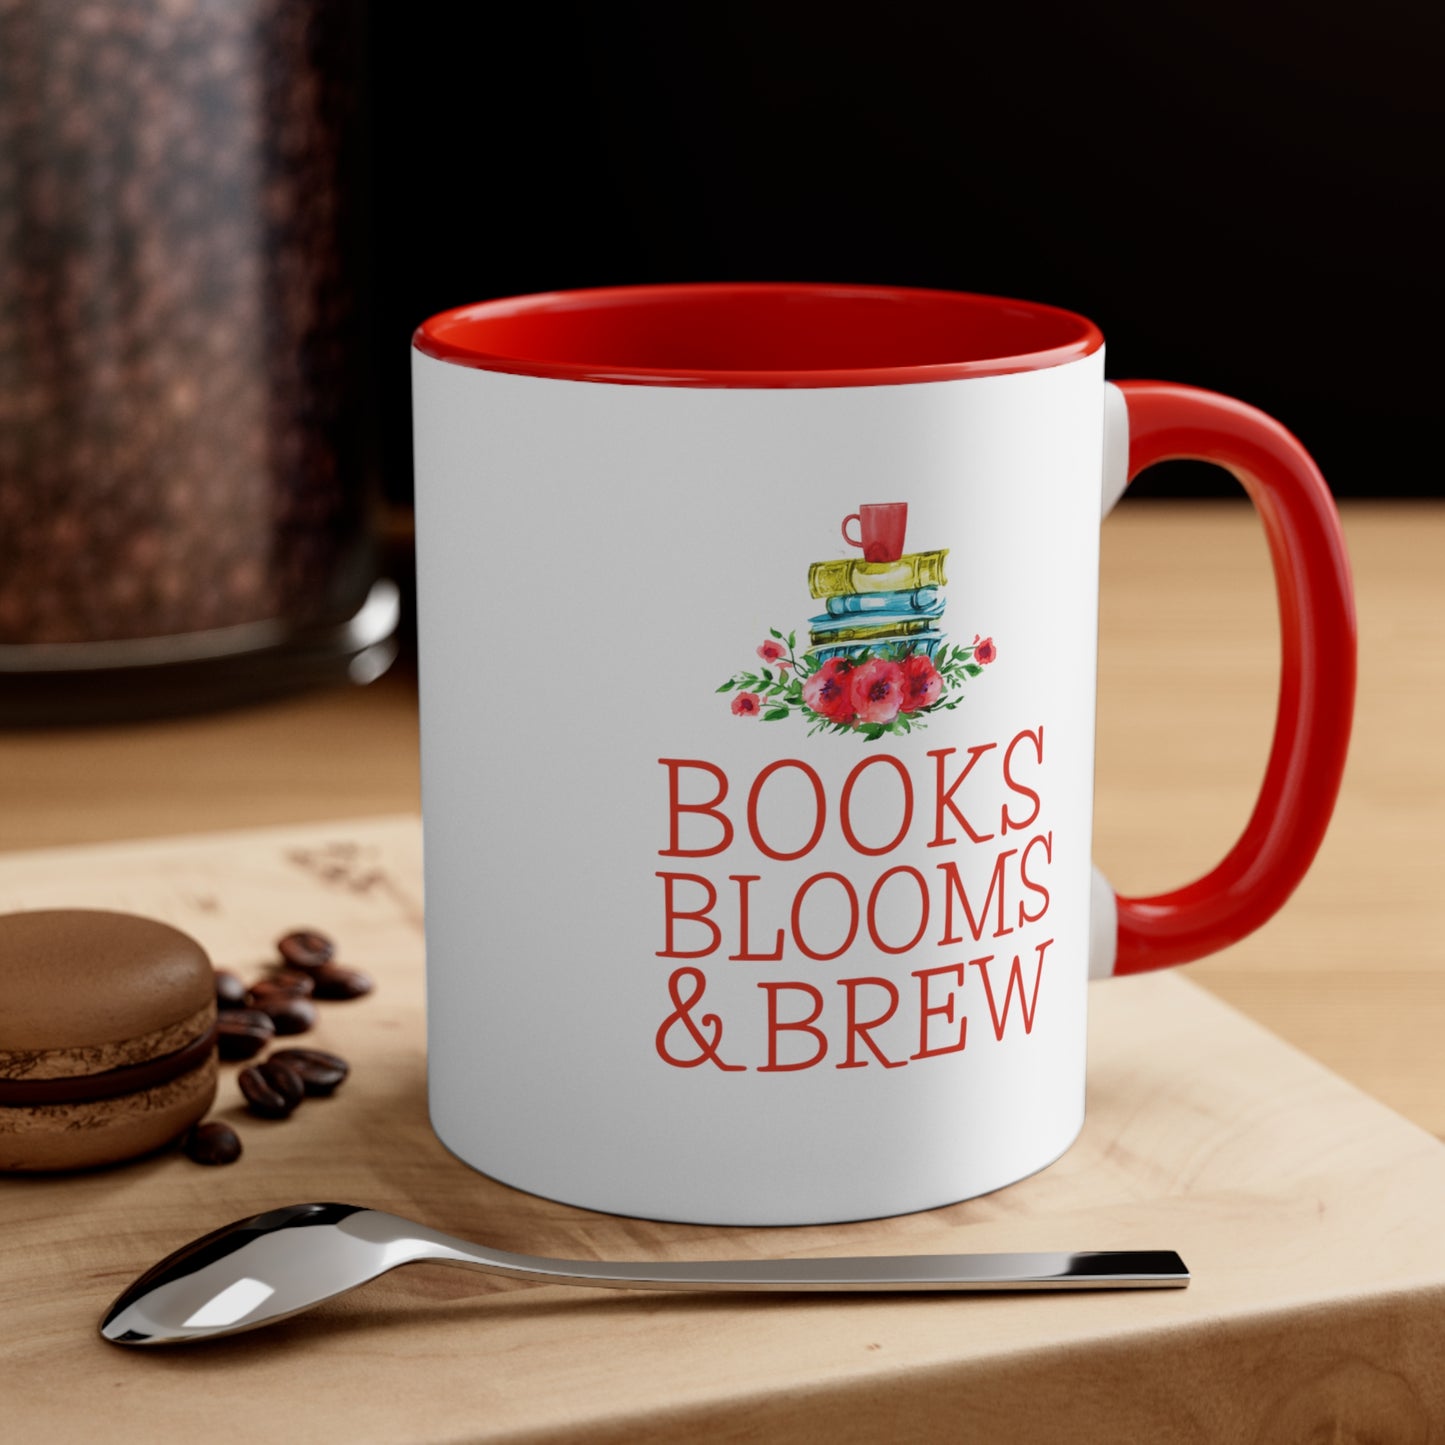 Books, Blooms & Brew Coffee Mug, 11oz - FREE U.S. SHIPPING